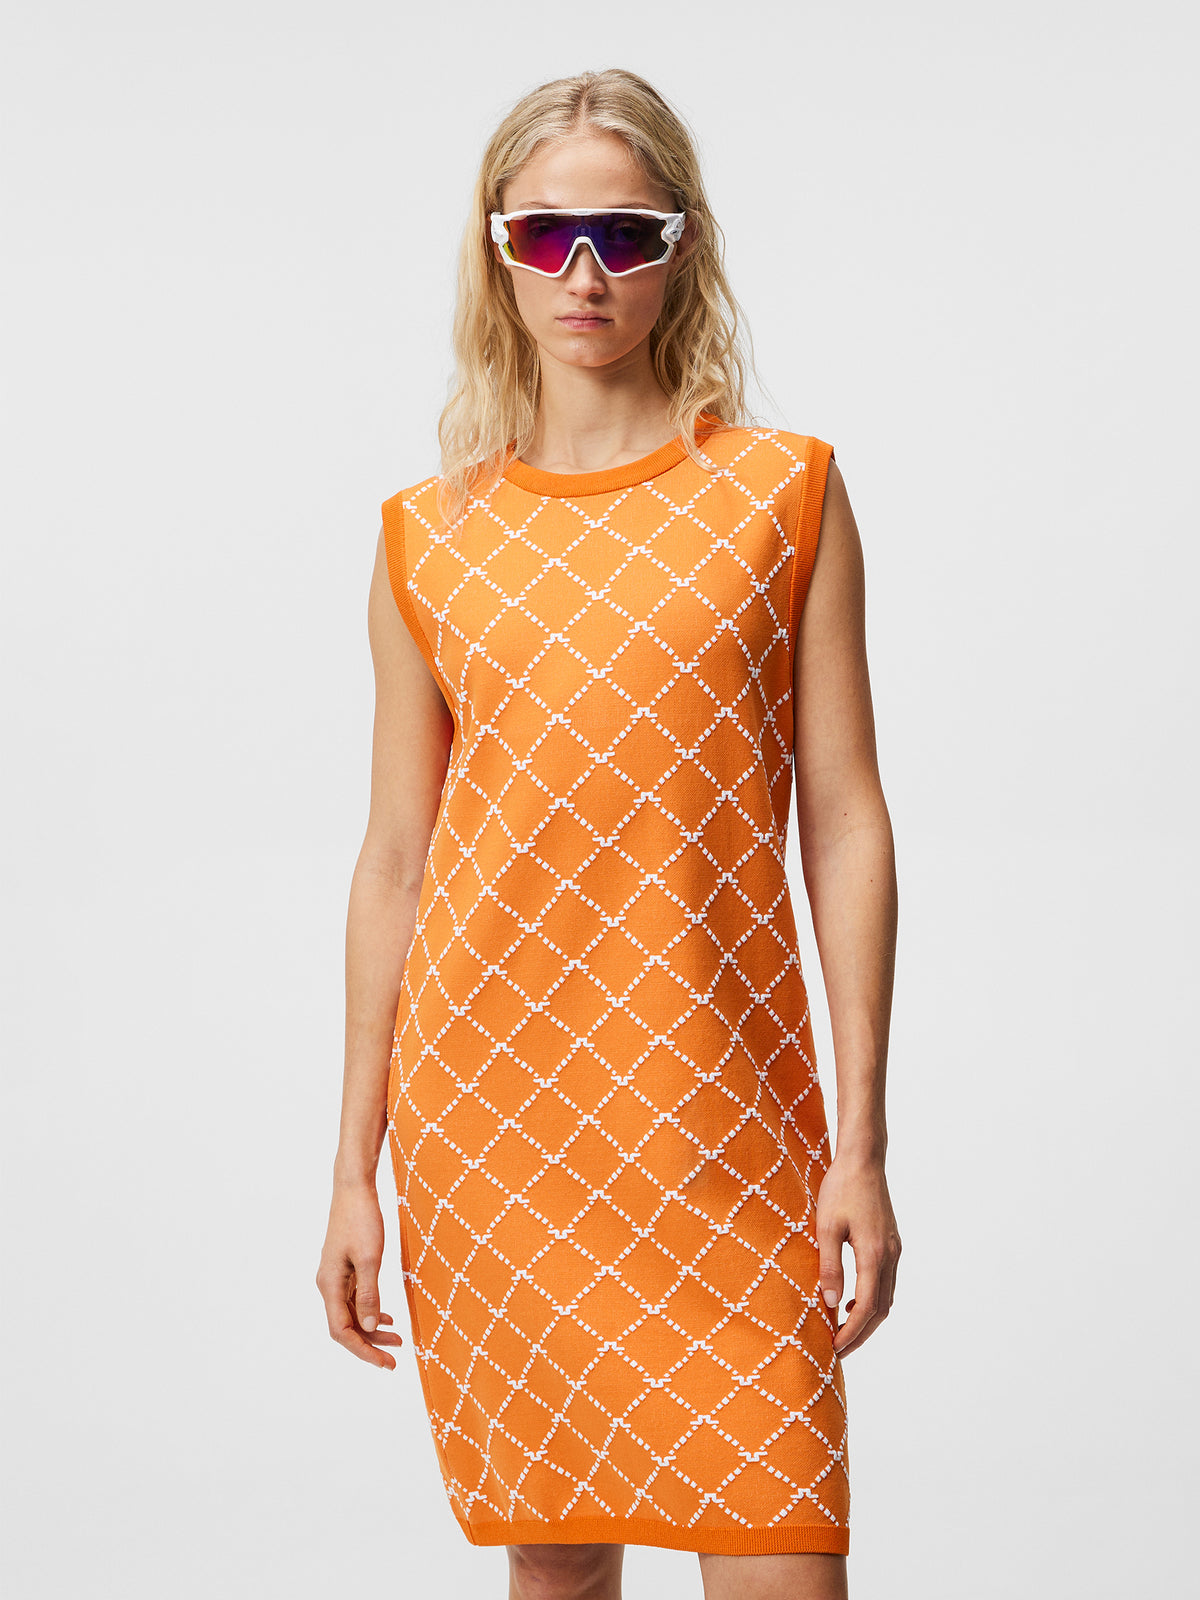 Fiona Knitted Dress / Russet Orange